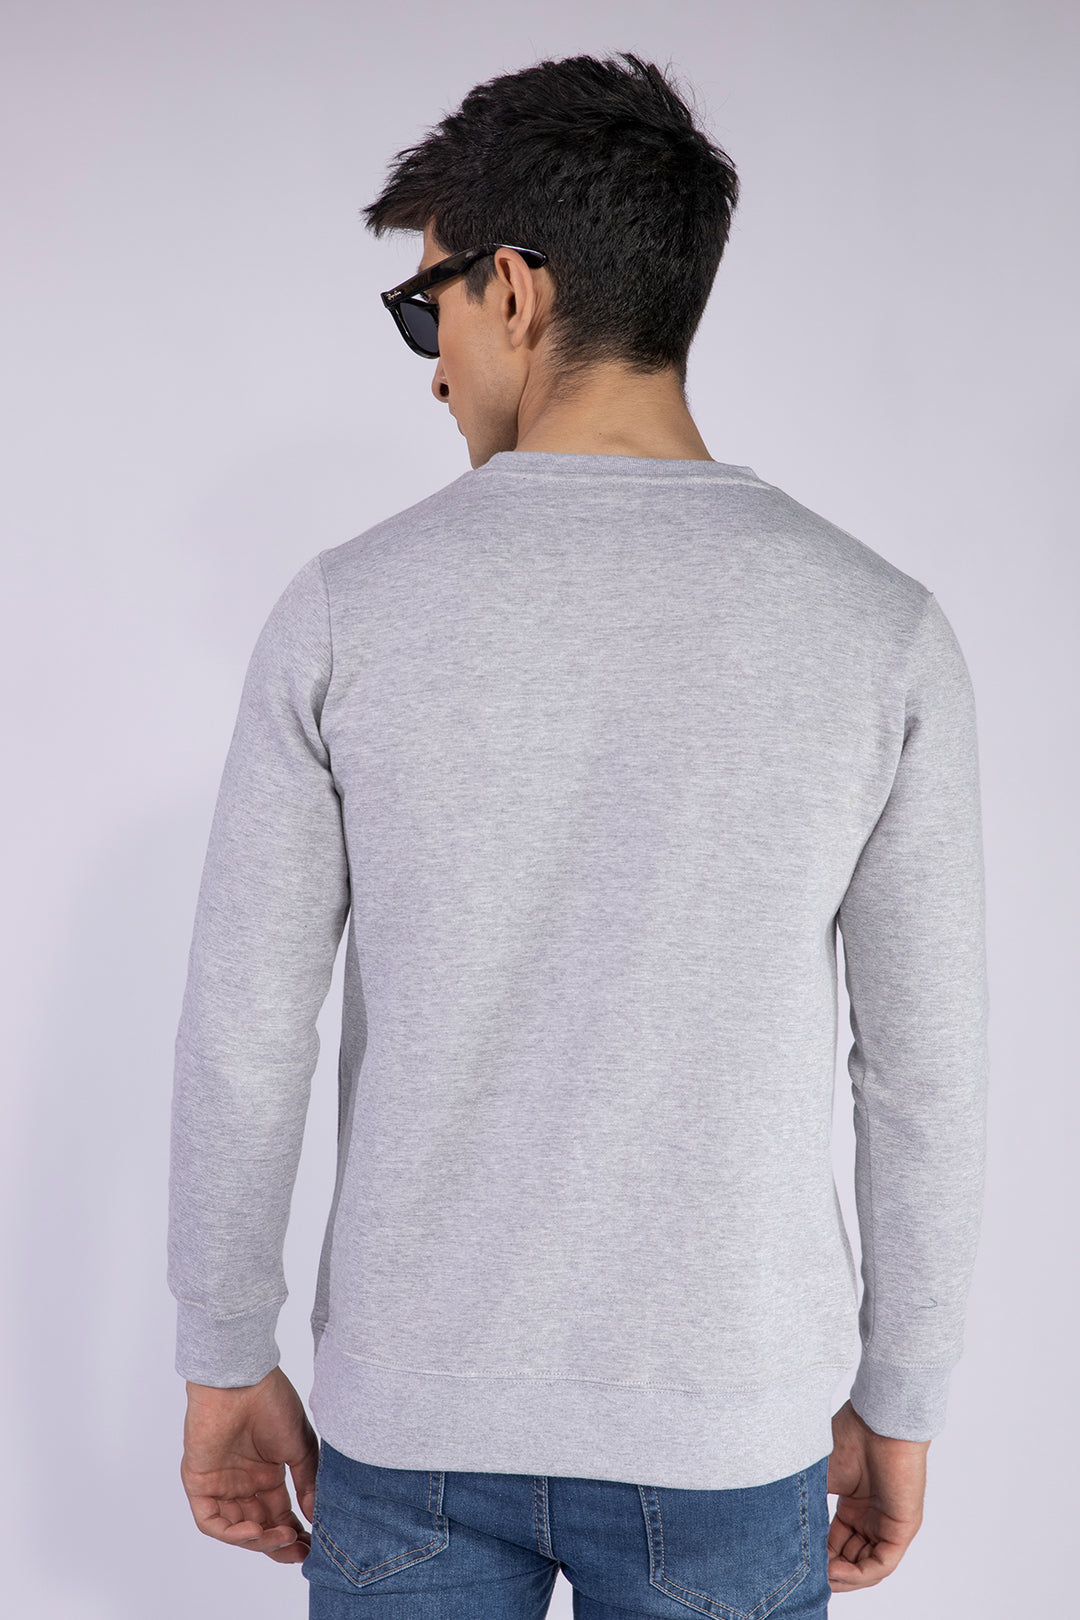 Acoustic Grey Embroidered Sweatshirt